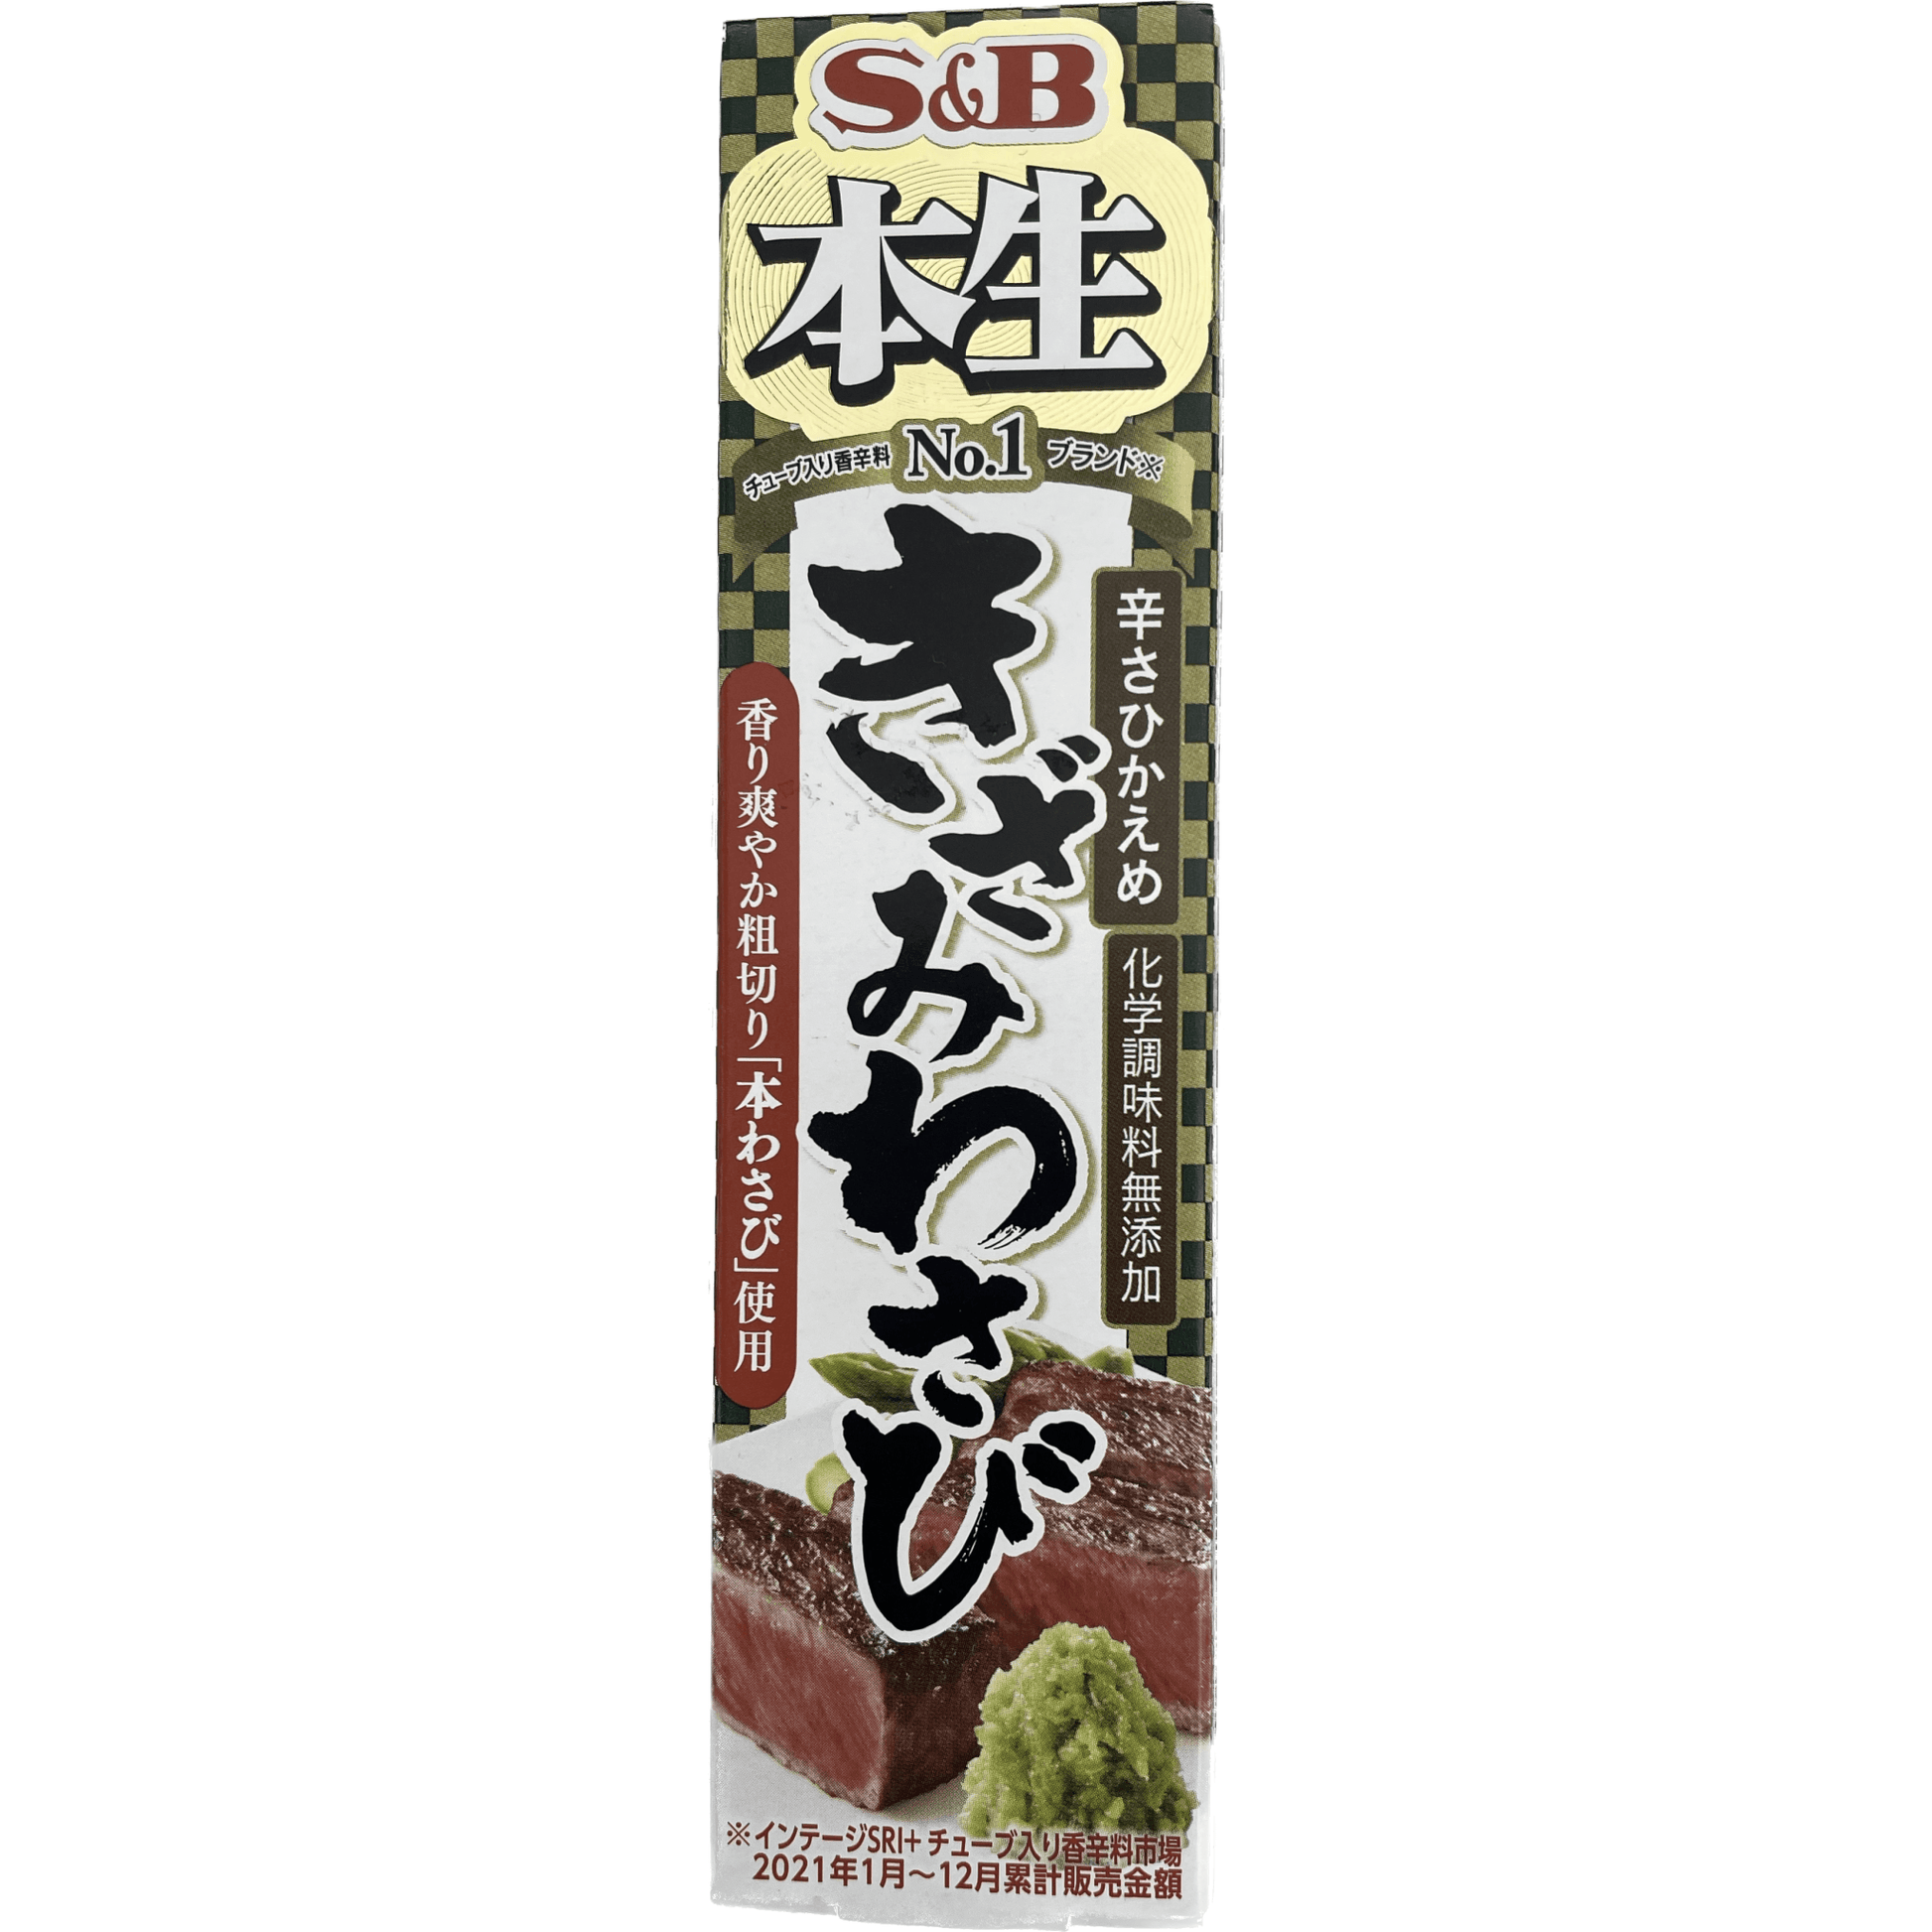 S&B Kizami Wasabi Paste in tube 43g / S&B 本生きざみわさび 43g - RiceWineShop